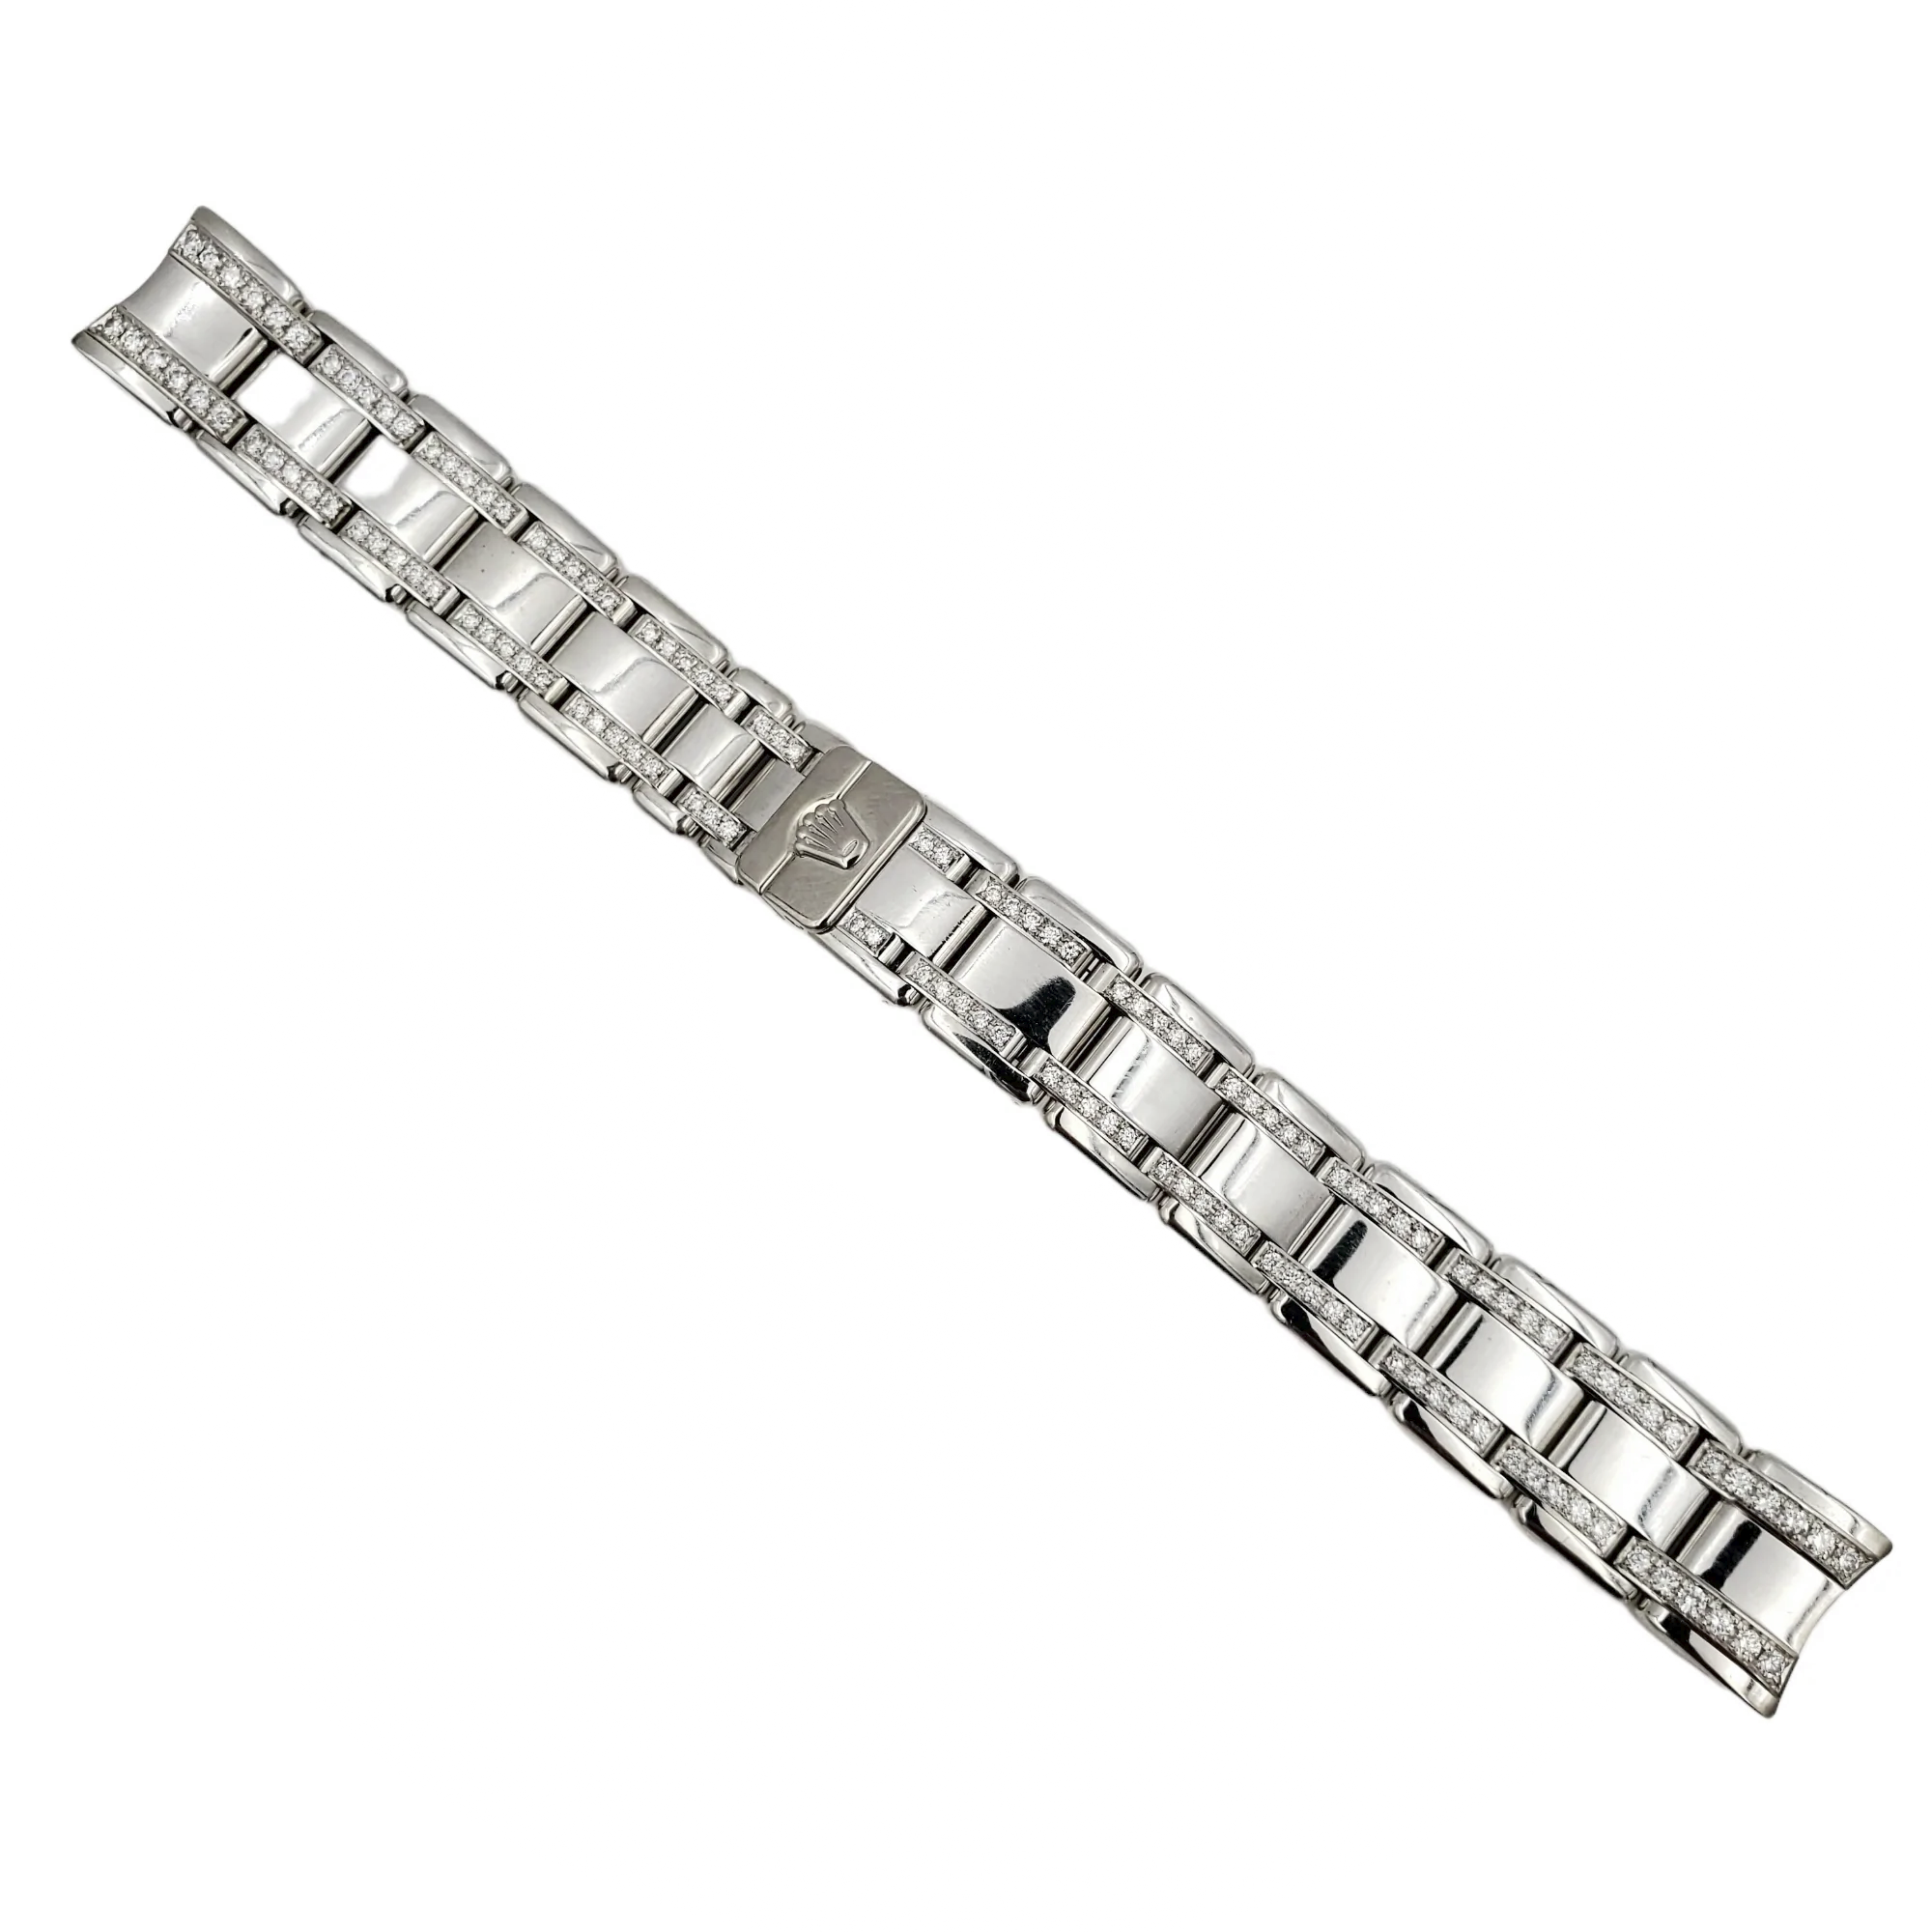 Ladies Rolex Pearlmaster 18K White Gold Watch Bracelet with Diamonds. (NEW)